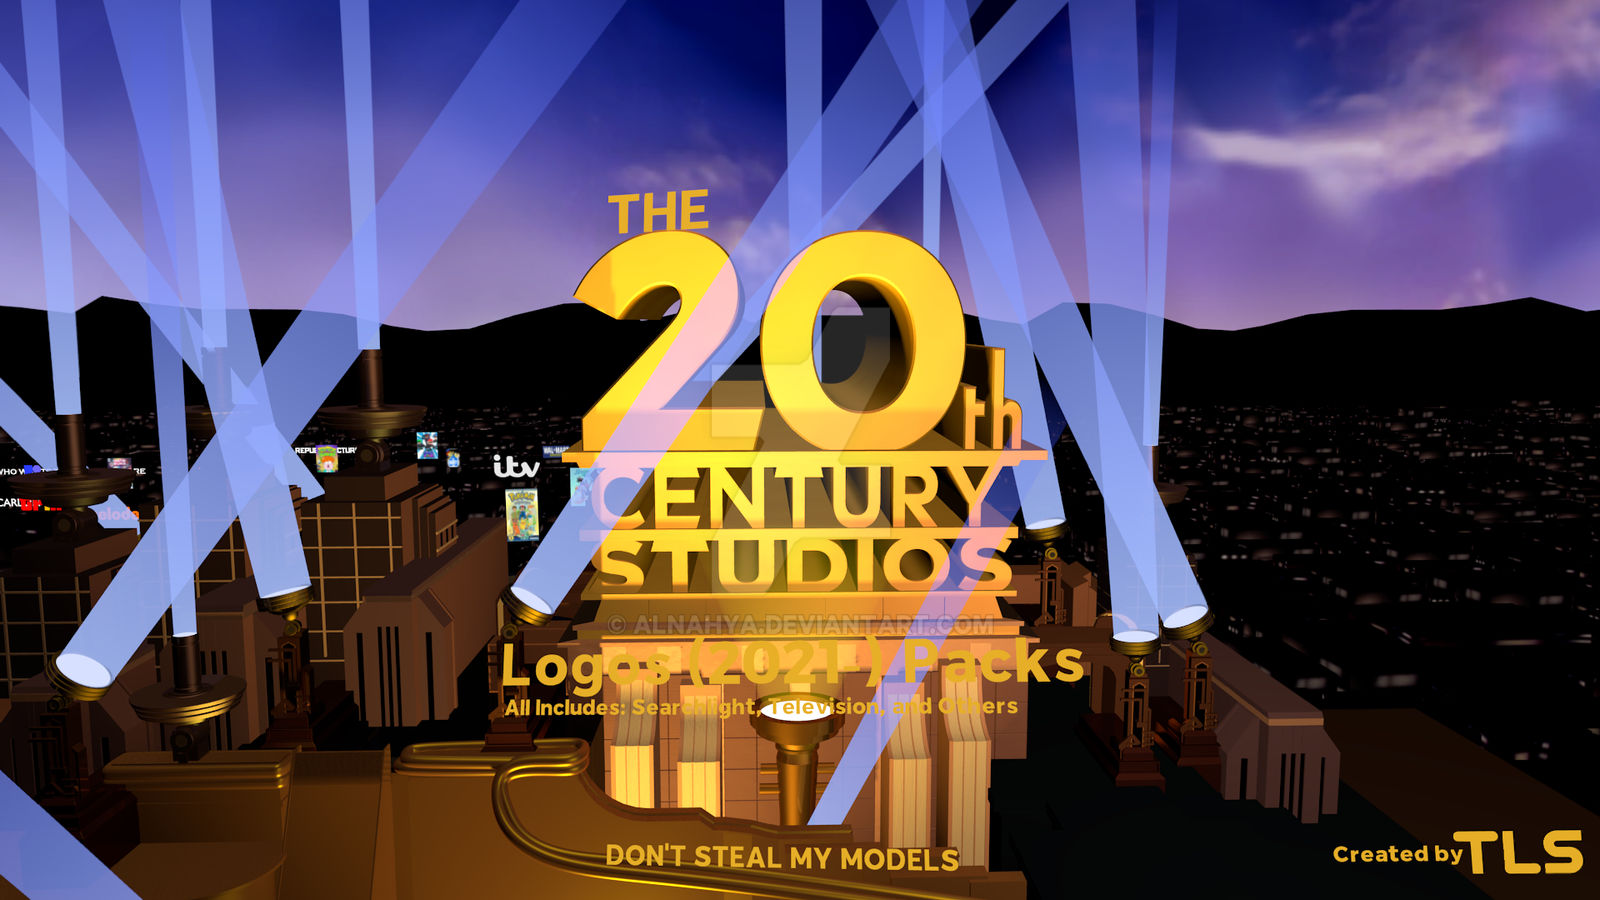 20th Century Studios Logos 2021 Packs By Alnahya On Deviantart